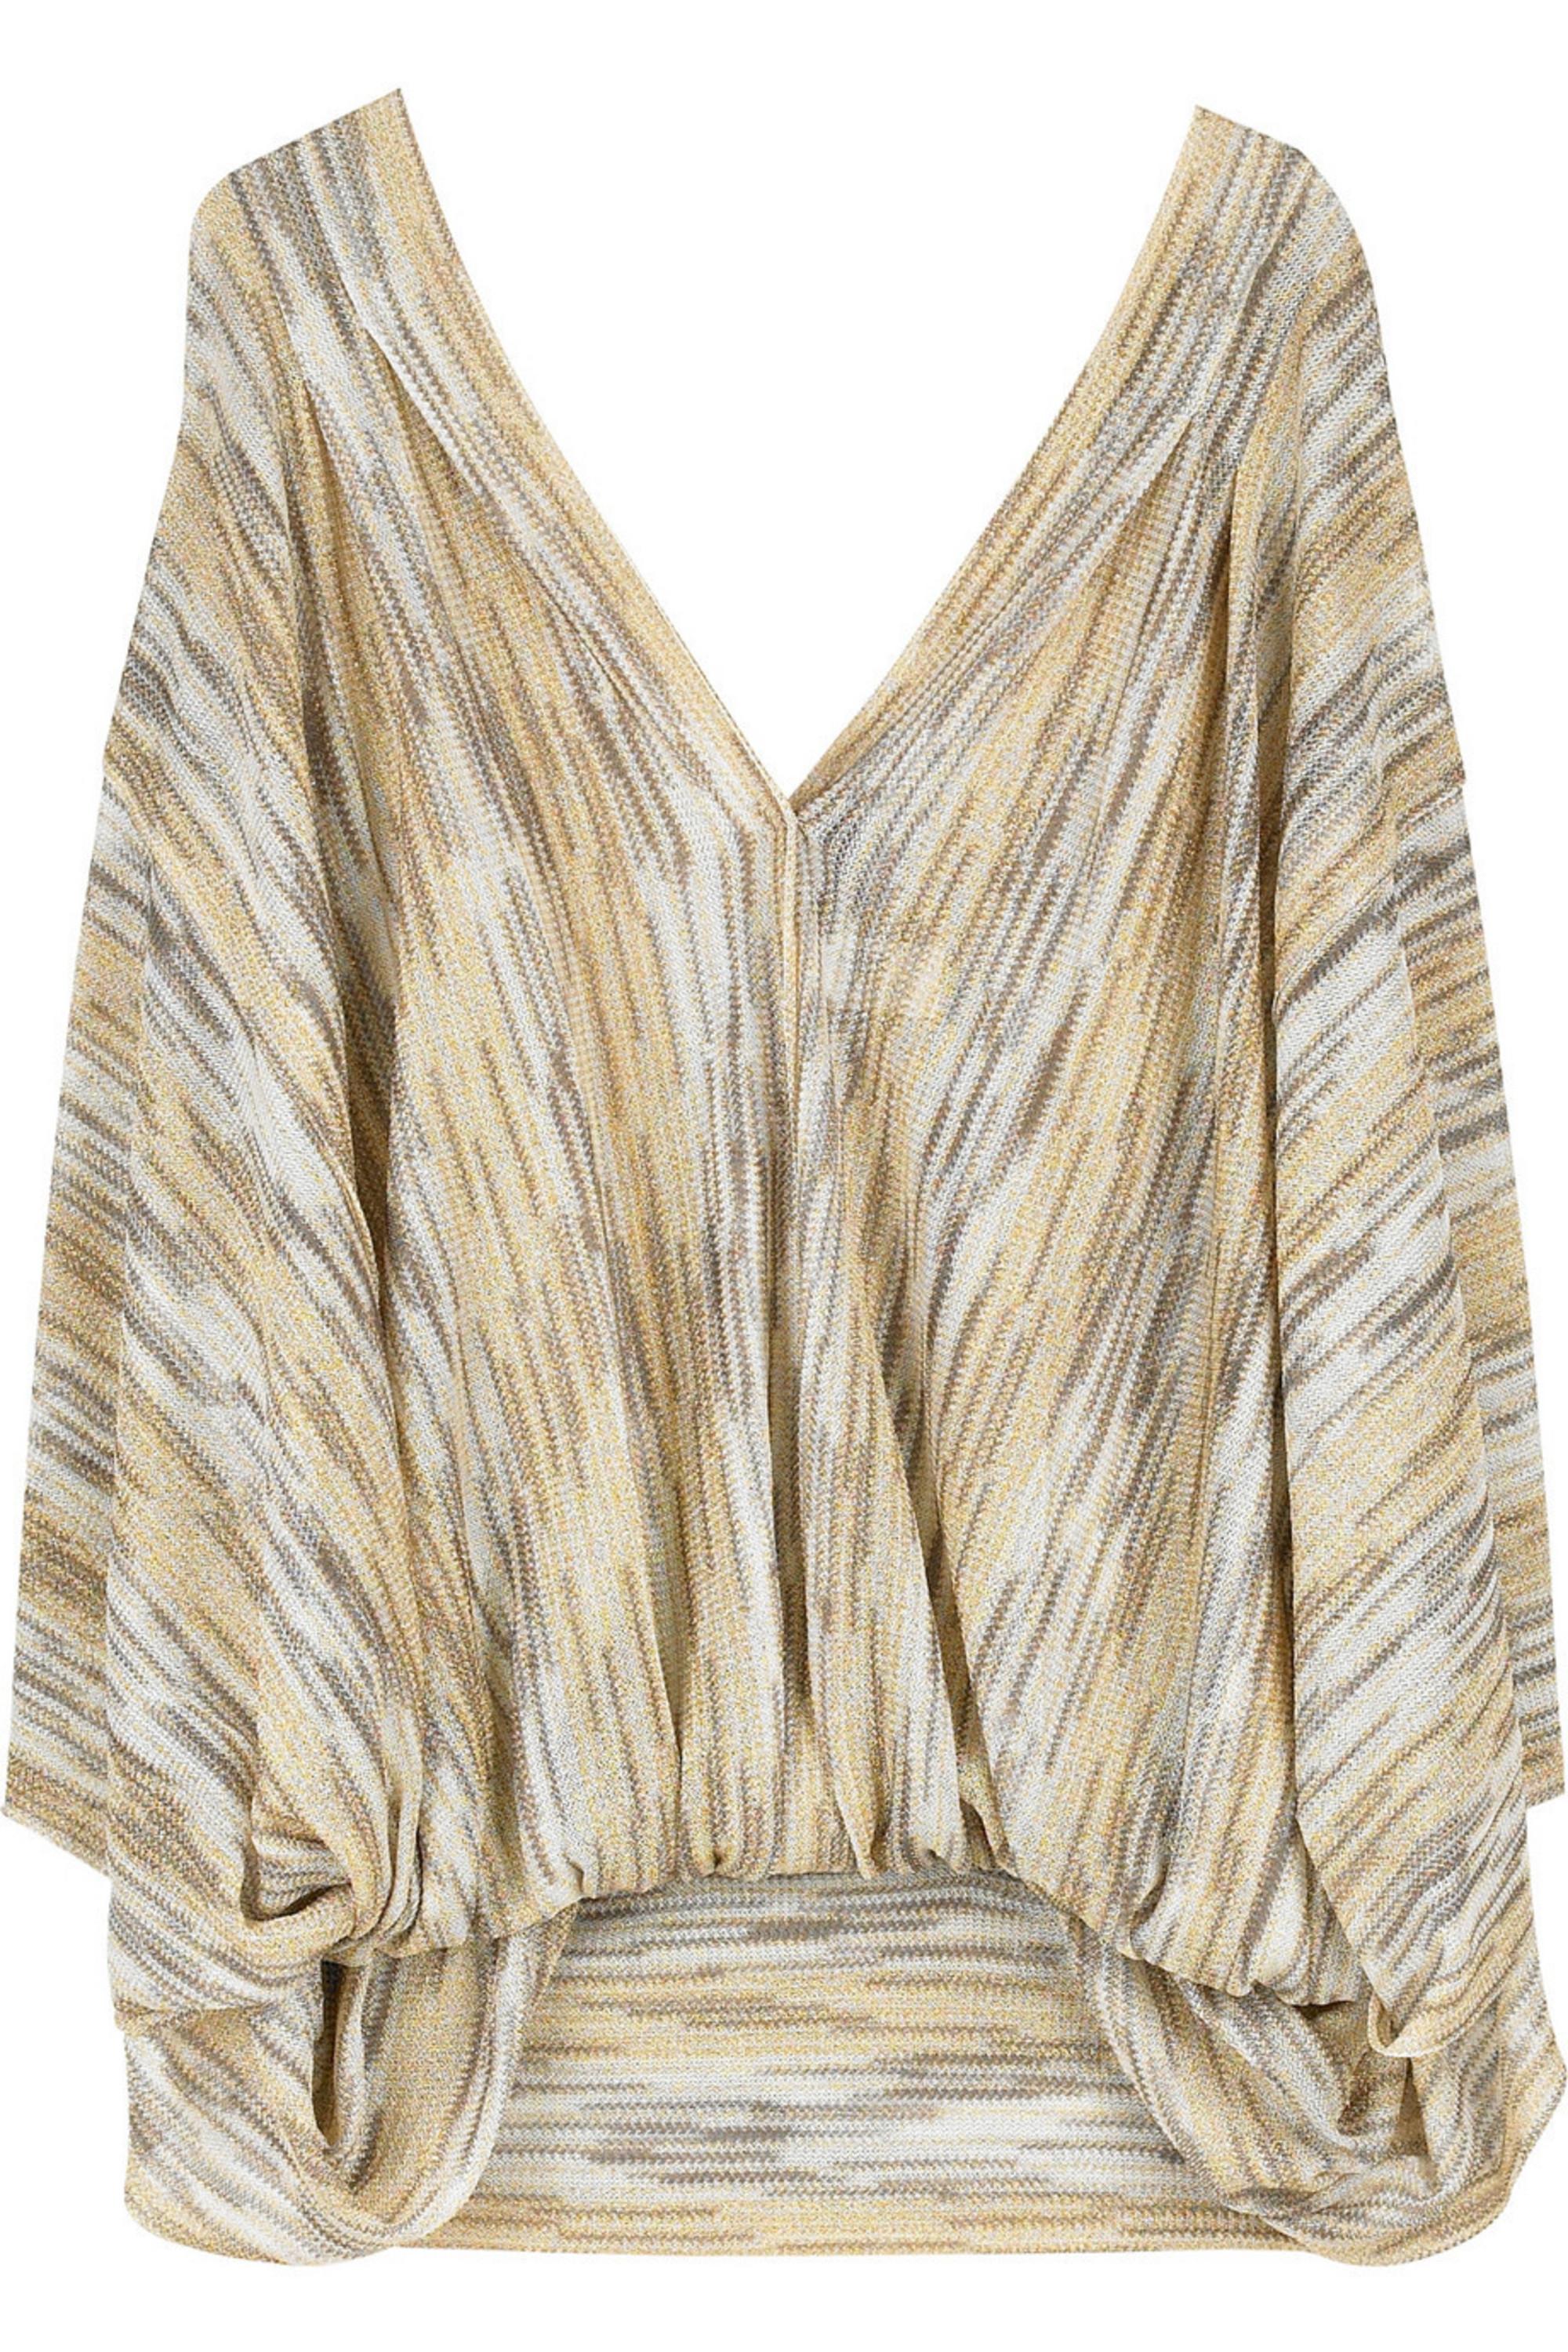 NEW Missoni Gold Metallic Signature Knit Dress Tunic Kaftan Cover Up 3